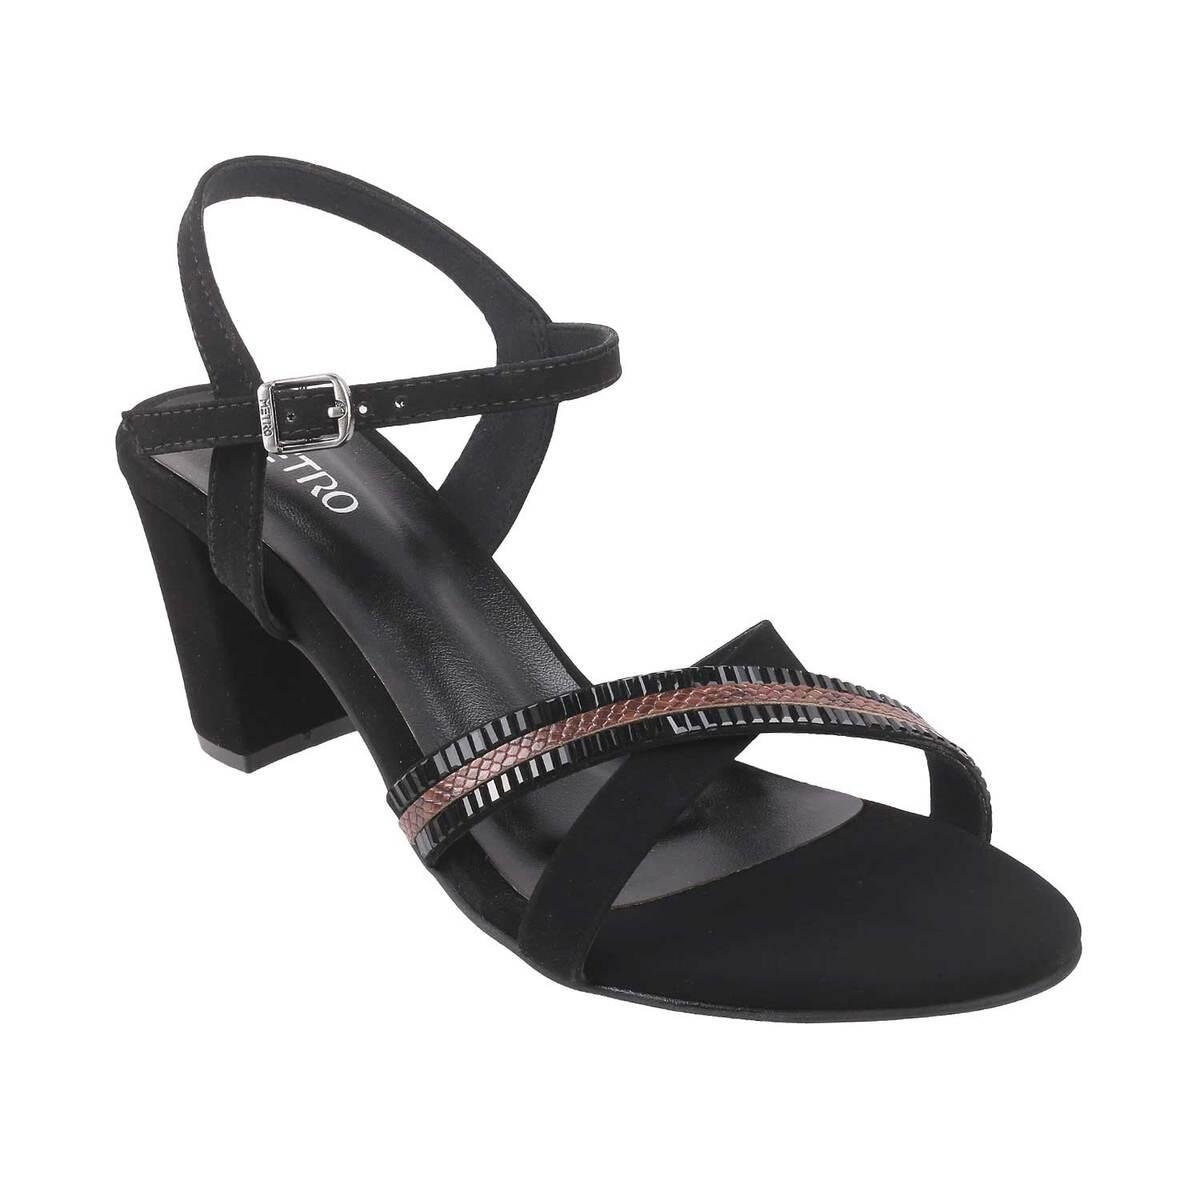 Buy Girls Black Casual Sandals Online | SKU: 57-75-11-31-Metro Shoes